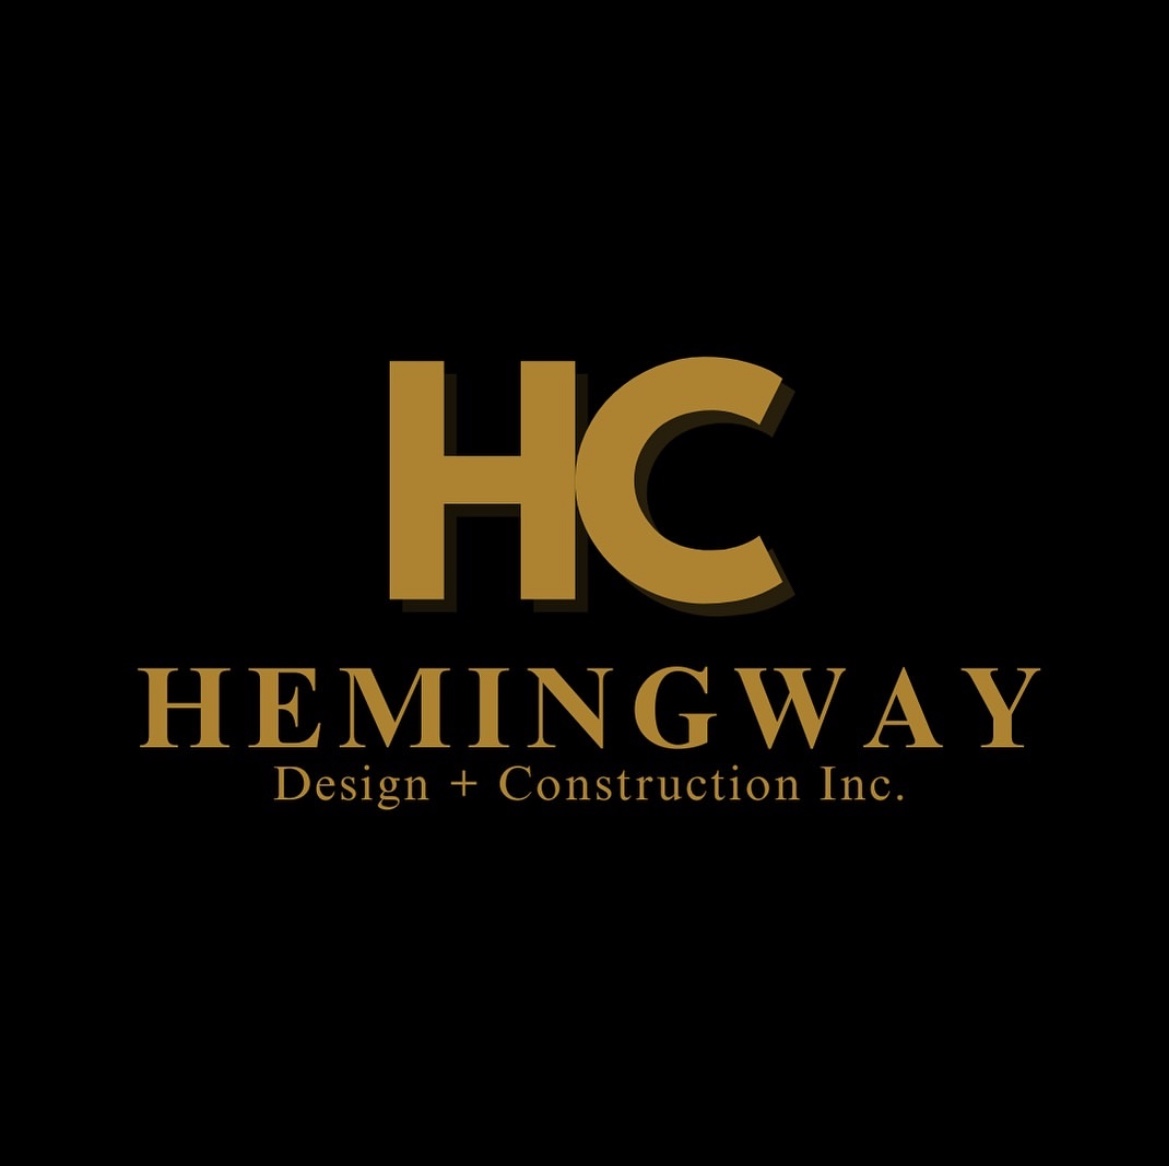 Hemingway Design and Construction Inc.'s logo